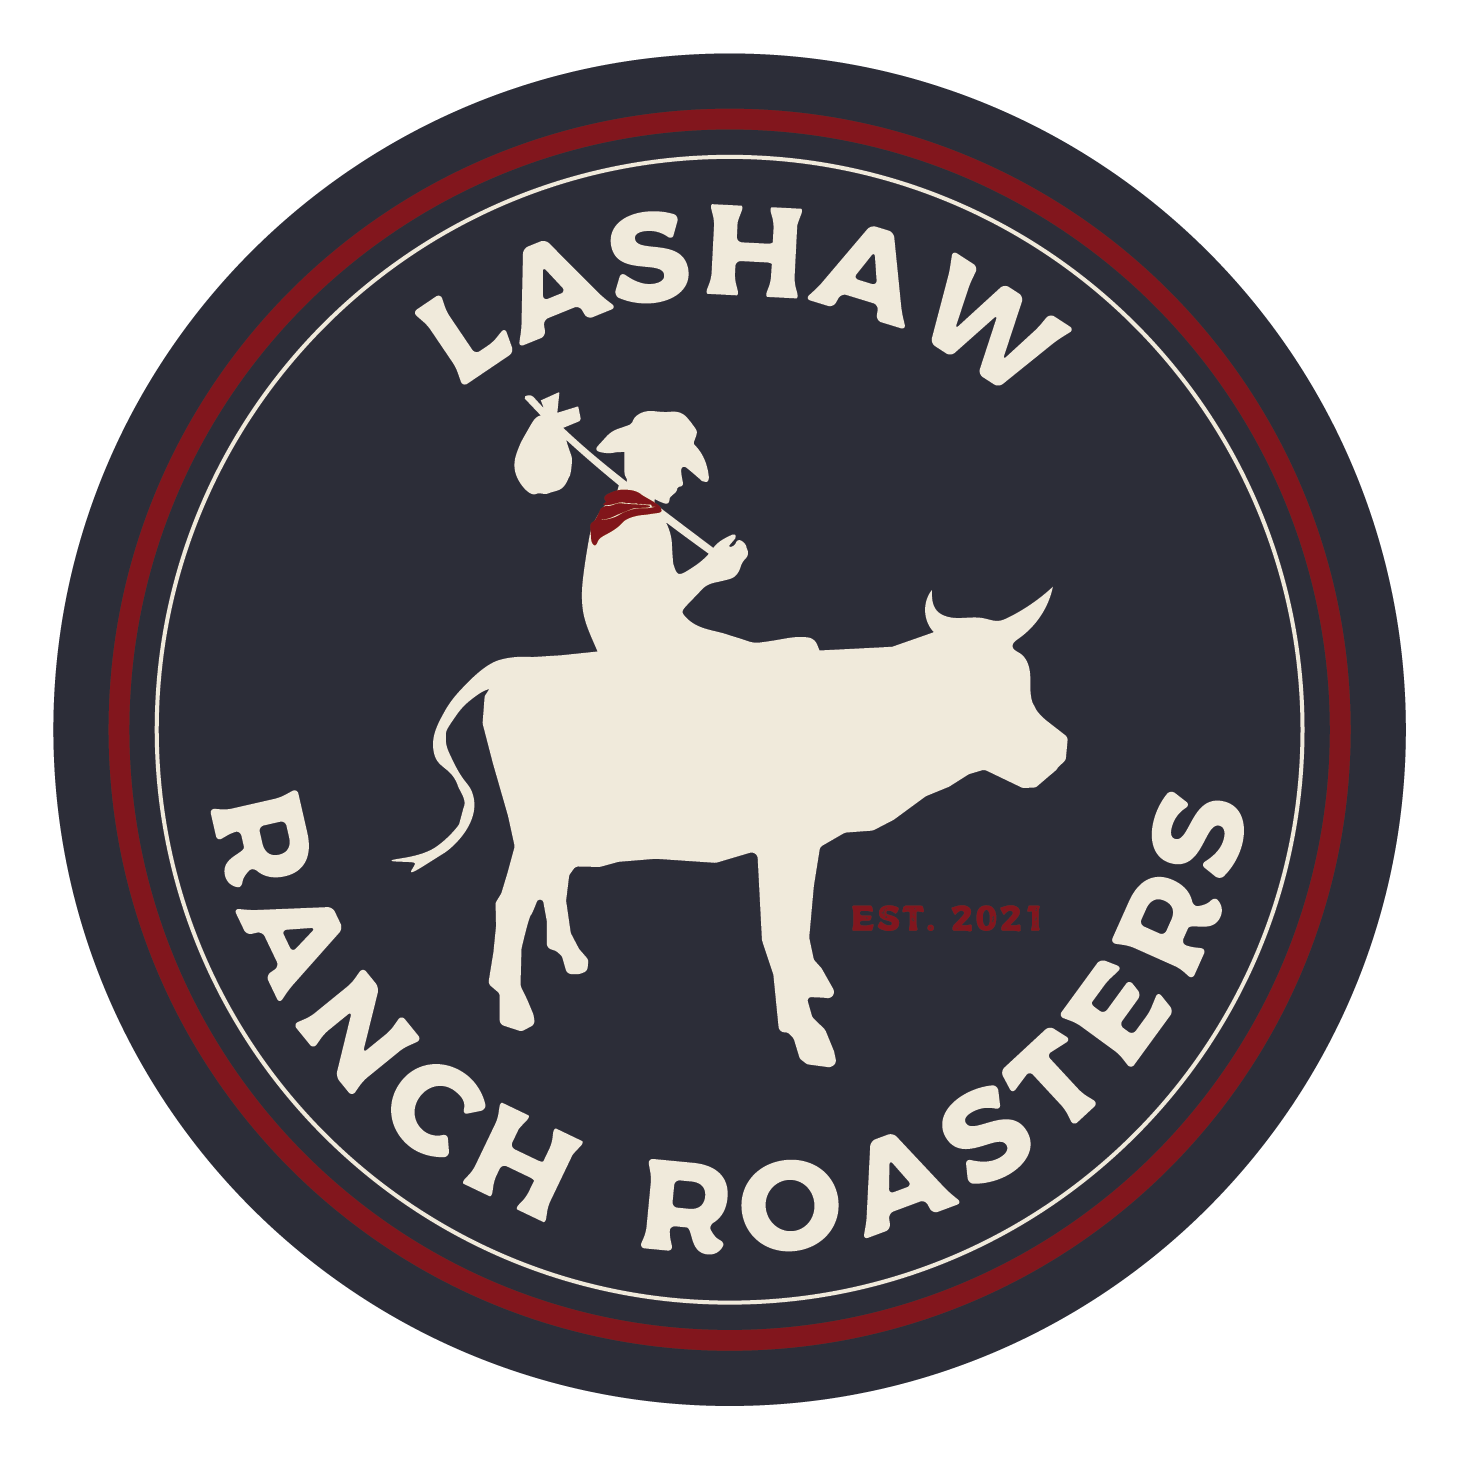 LaShaw Ranch Roasters